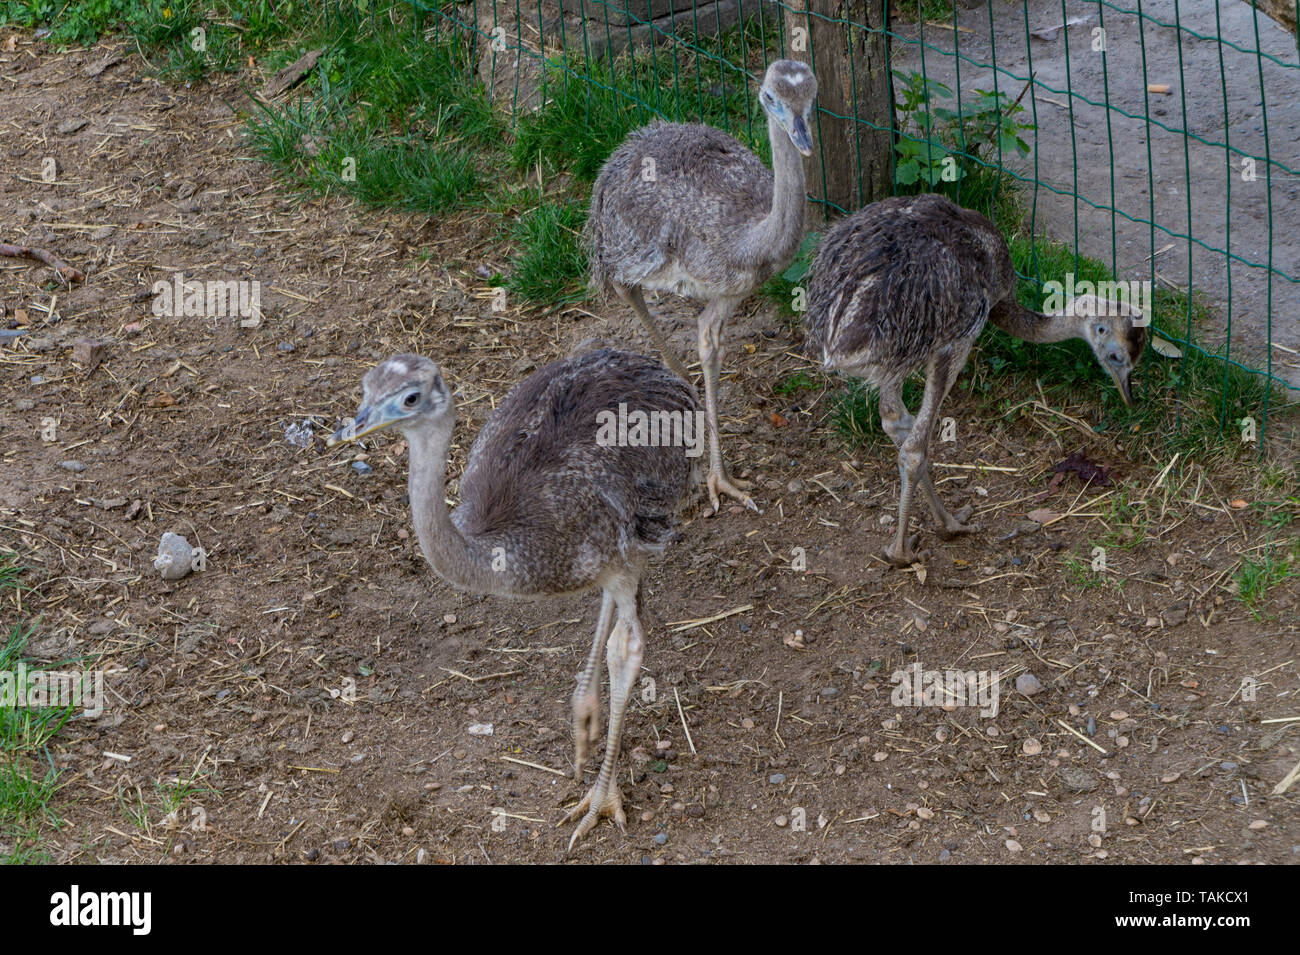 Three emu babies in an enclosure Stock Photo